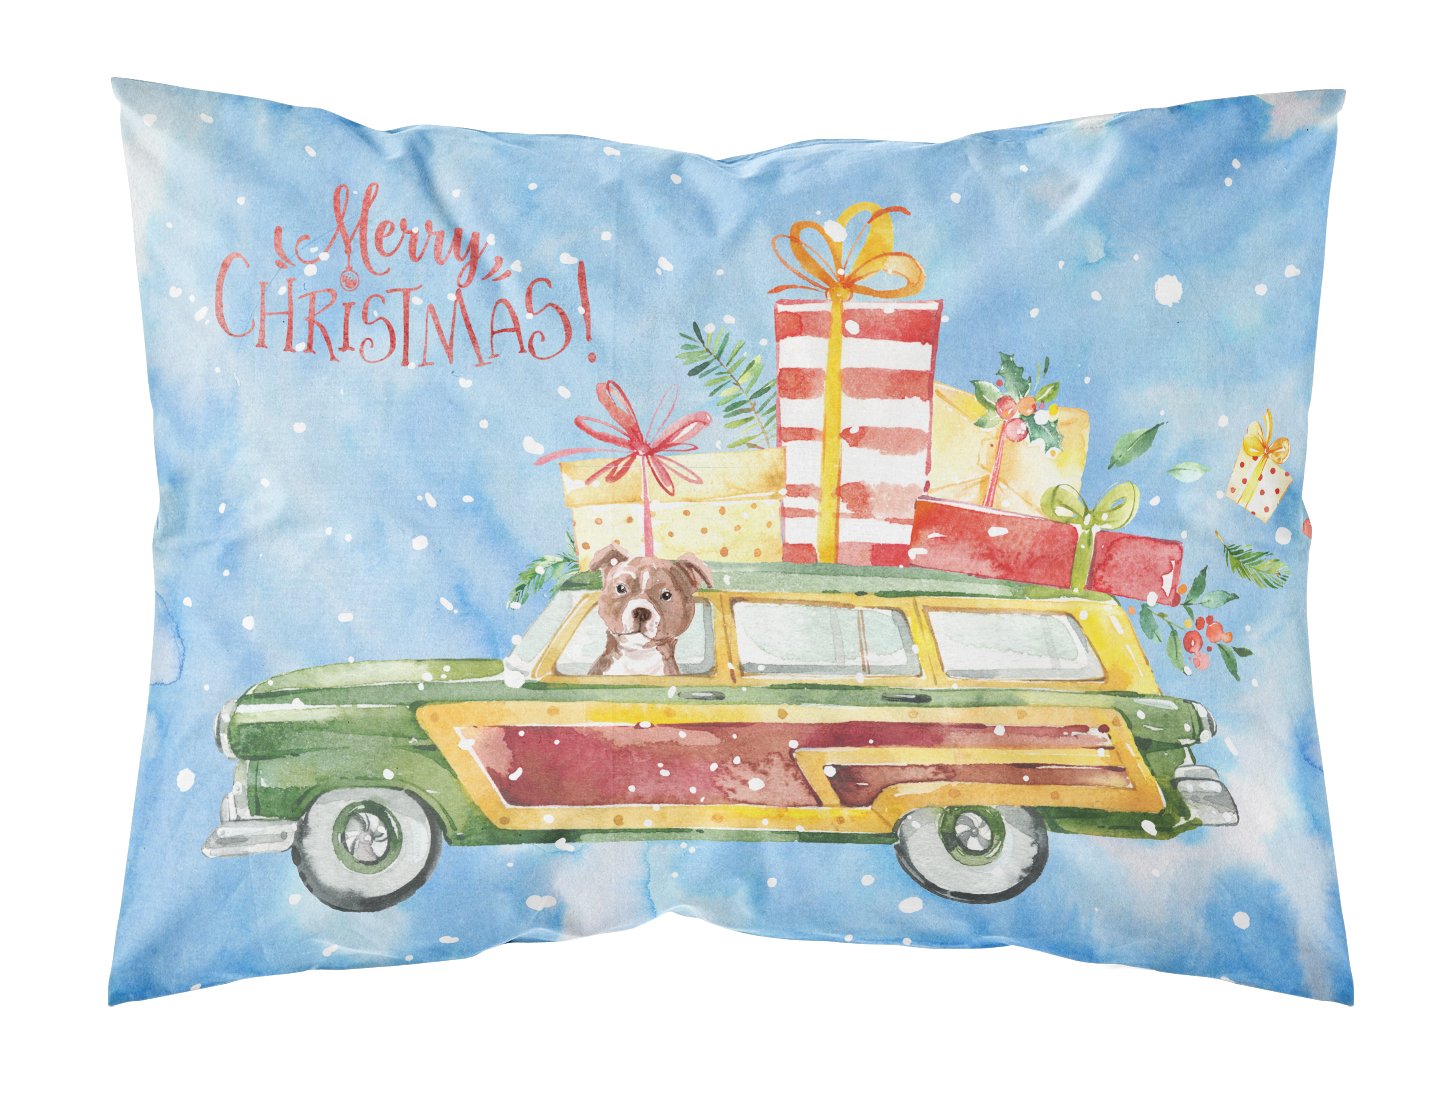 Merry Christmas Red Staffie Bull Terrier Fabric Standard Pillowcase CK2464PILLOWCASE by Caroline's Treasures